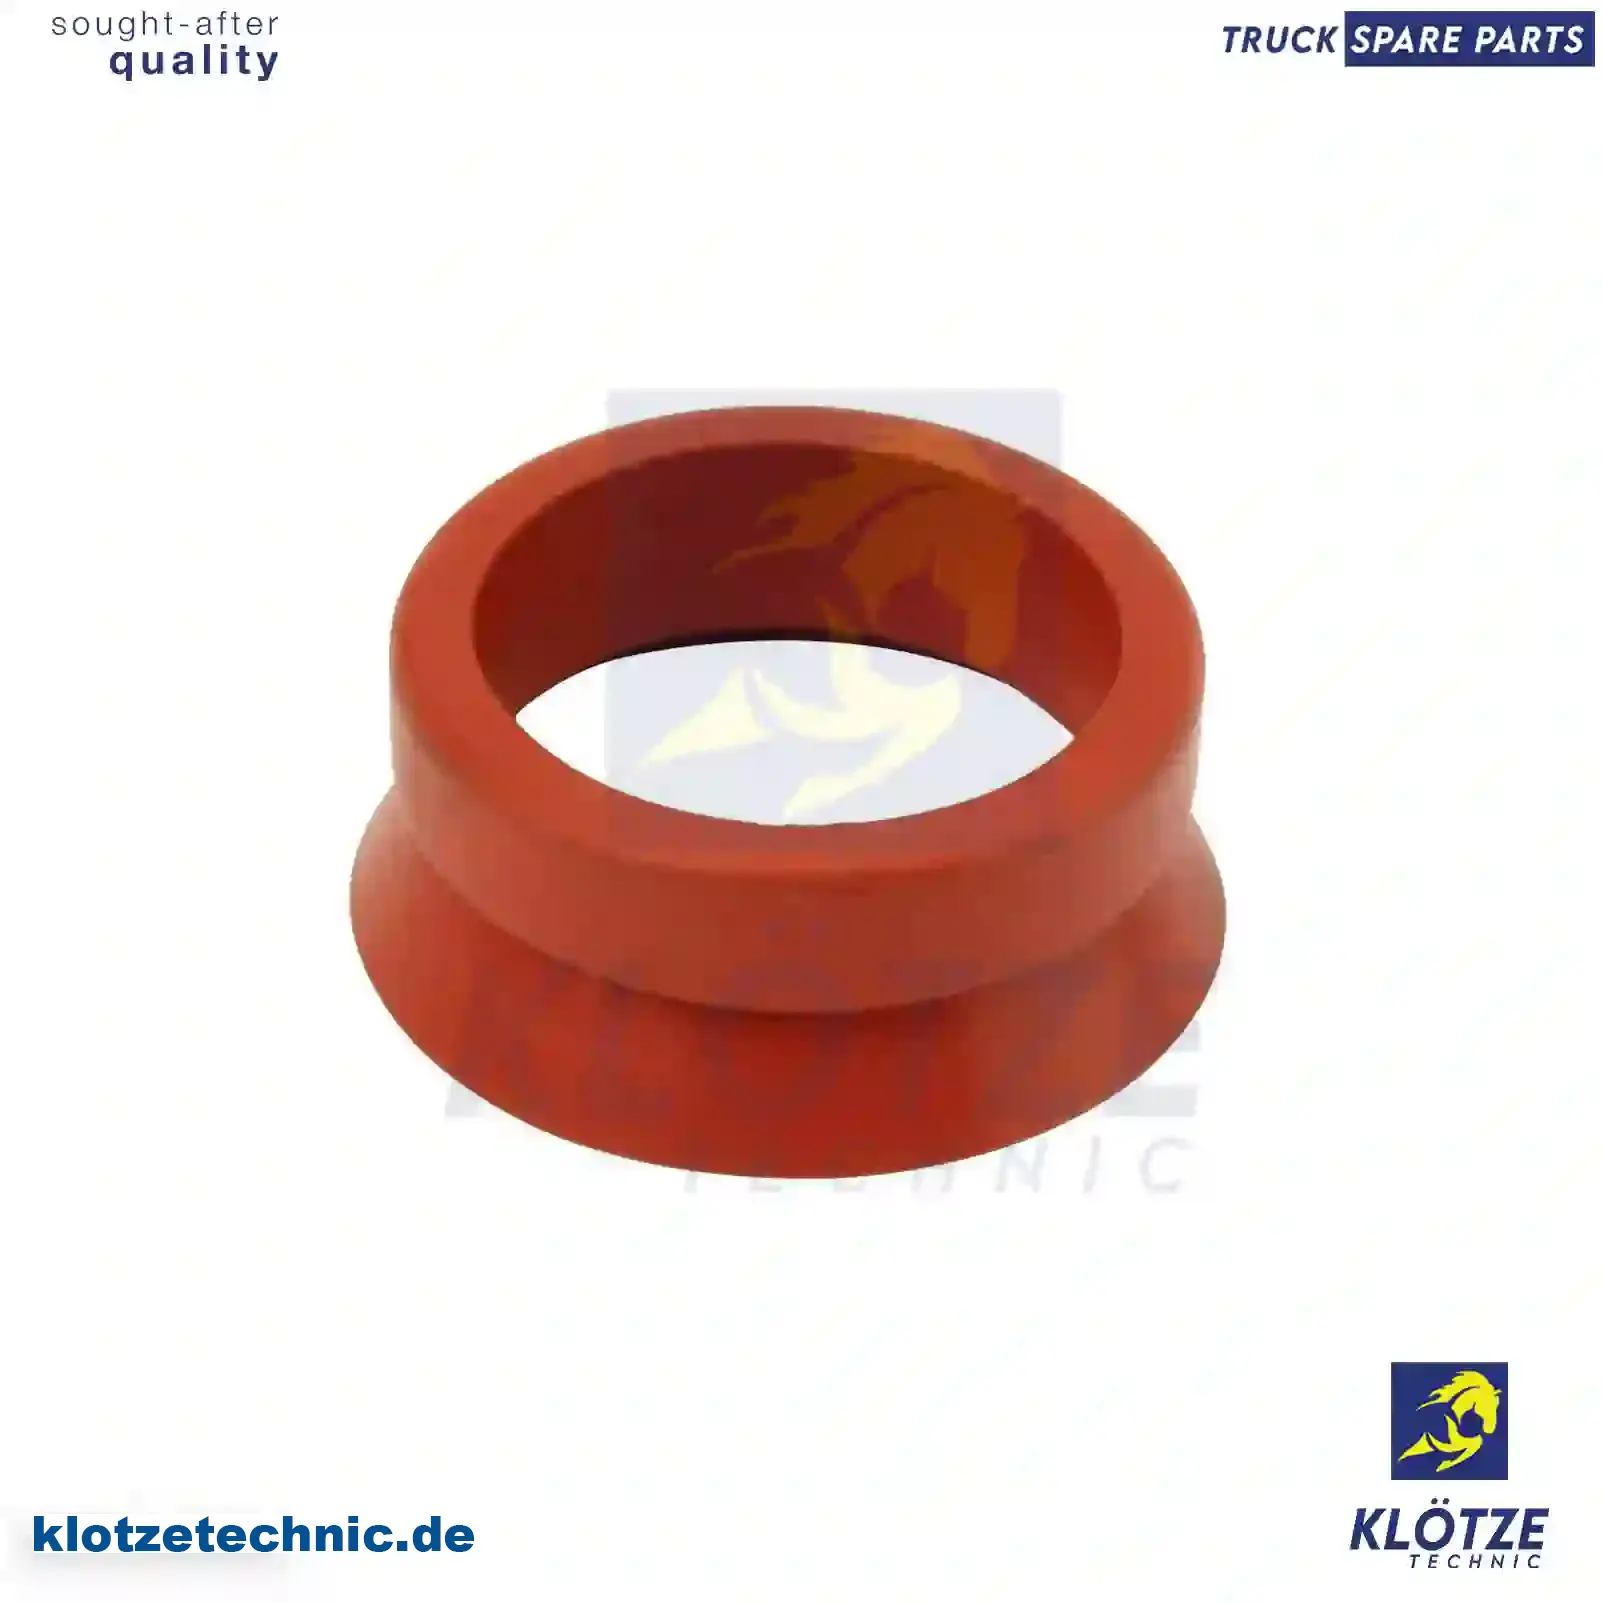 Seal ring, injection nozzle, 469455, 948965, ZG10512-0008 || Klötze Technic